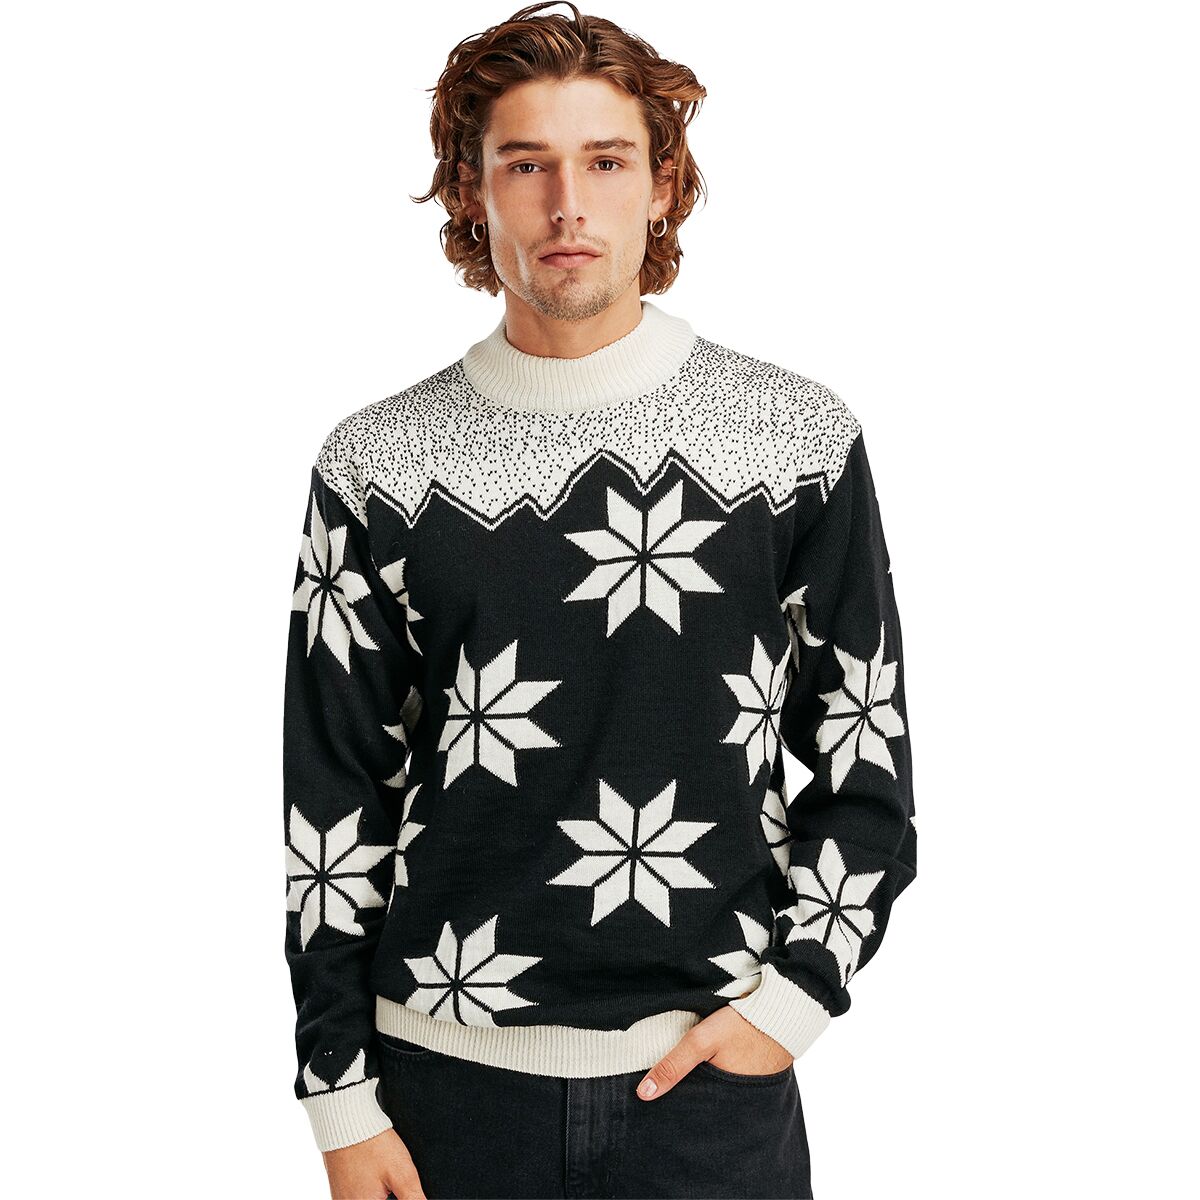 Dale of Norway Winter Star Sweater - Men's